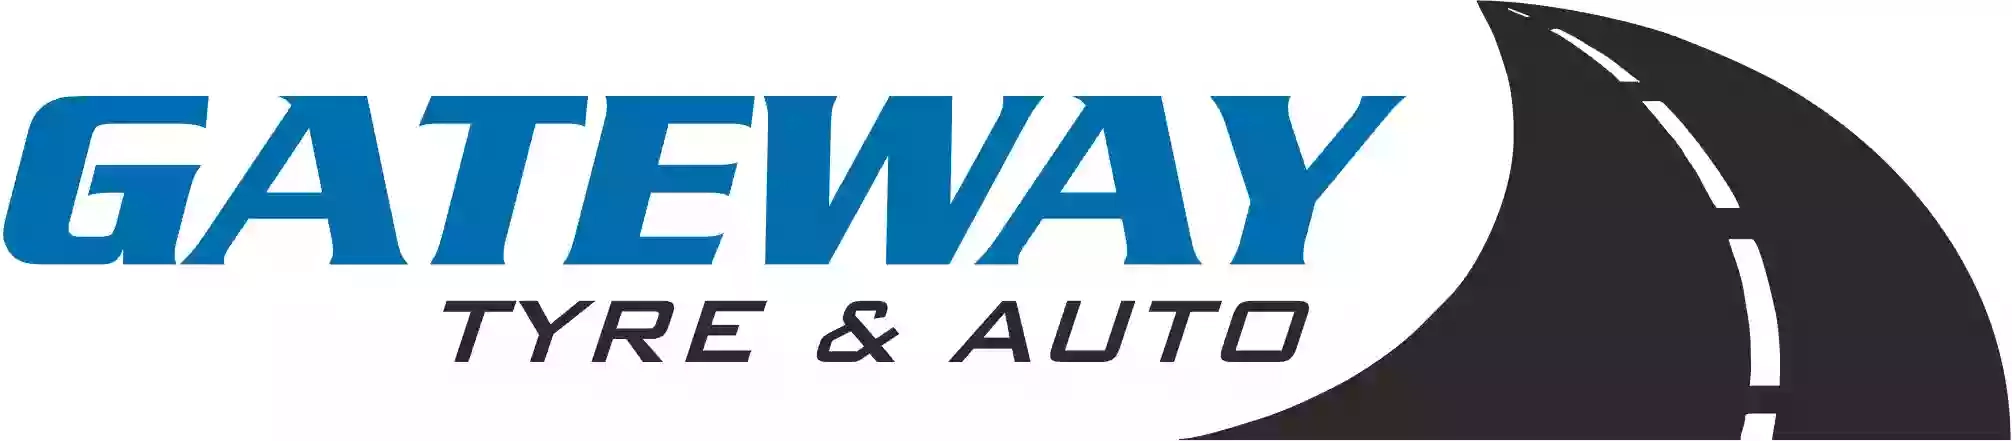 Gateway Tyre & Auto Ltd